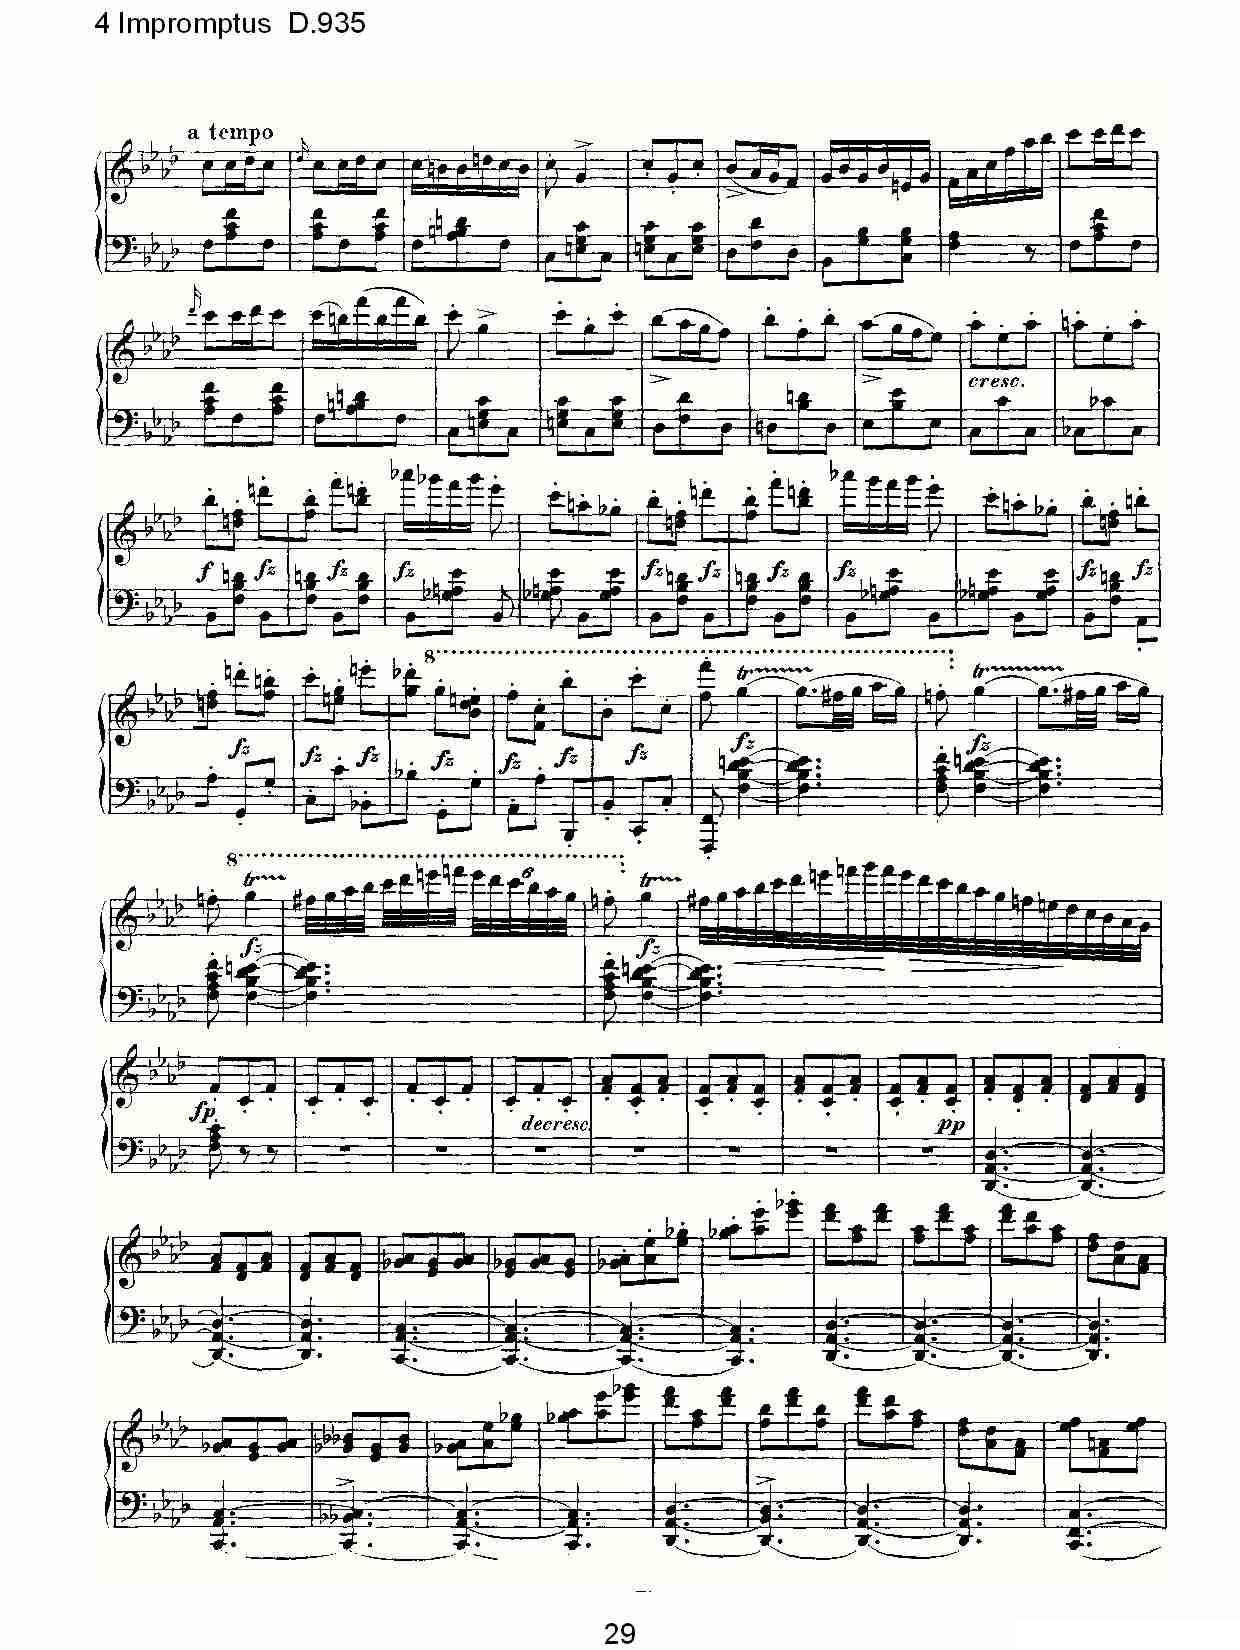 4 Impromptus D.935（4人即兴演奏D.935）钢琴曲谱（图29）